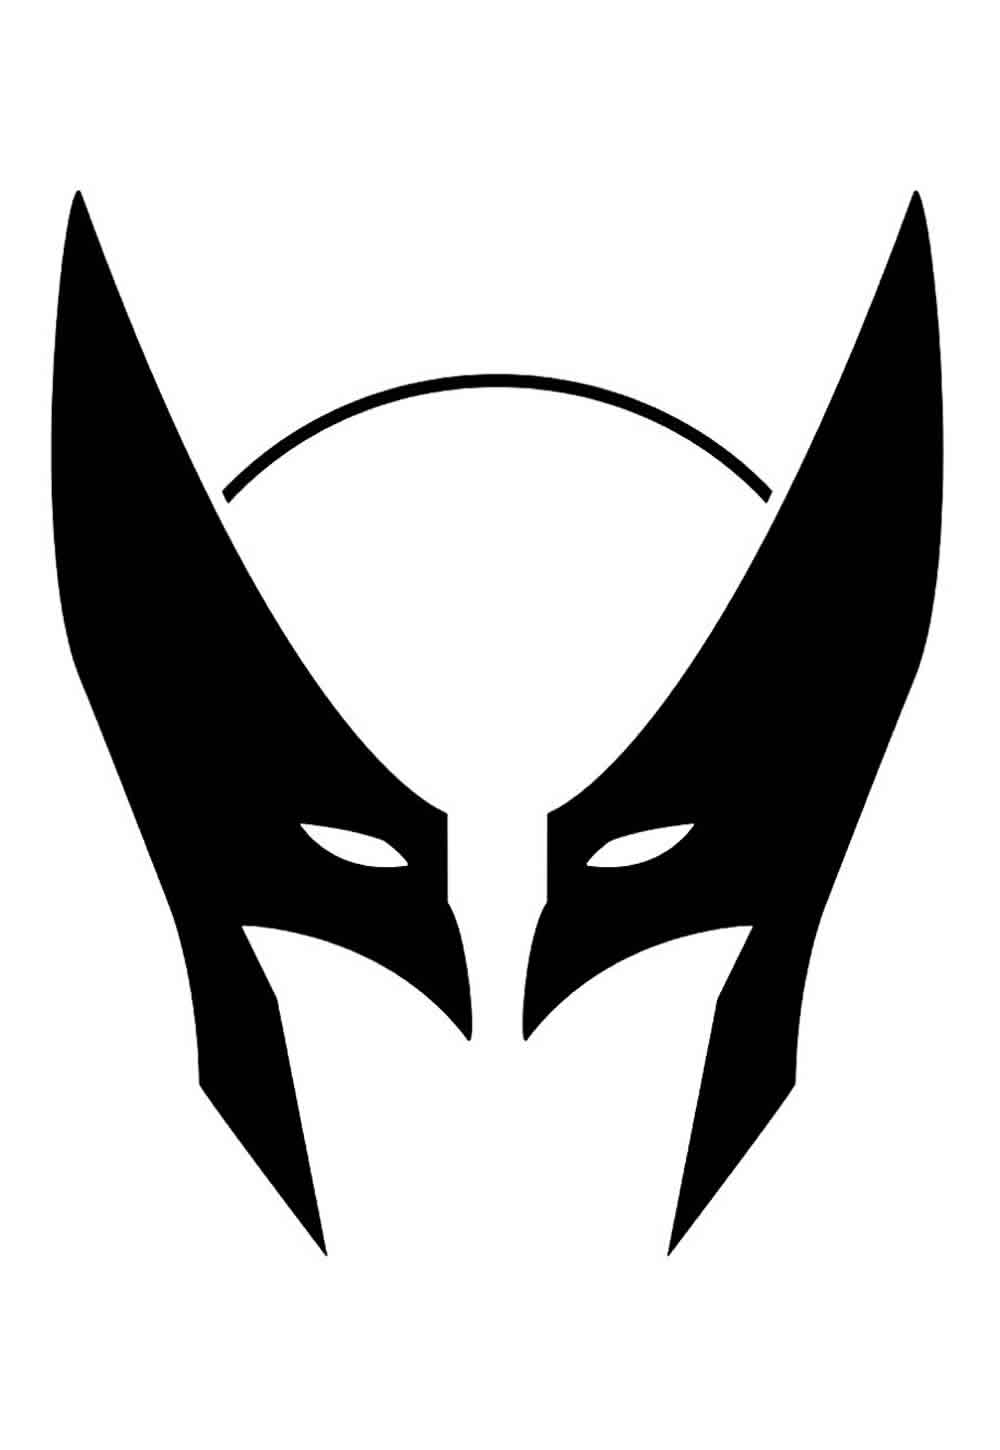 Máscara de Wolverine para imprimir e recortar